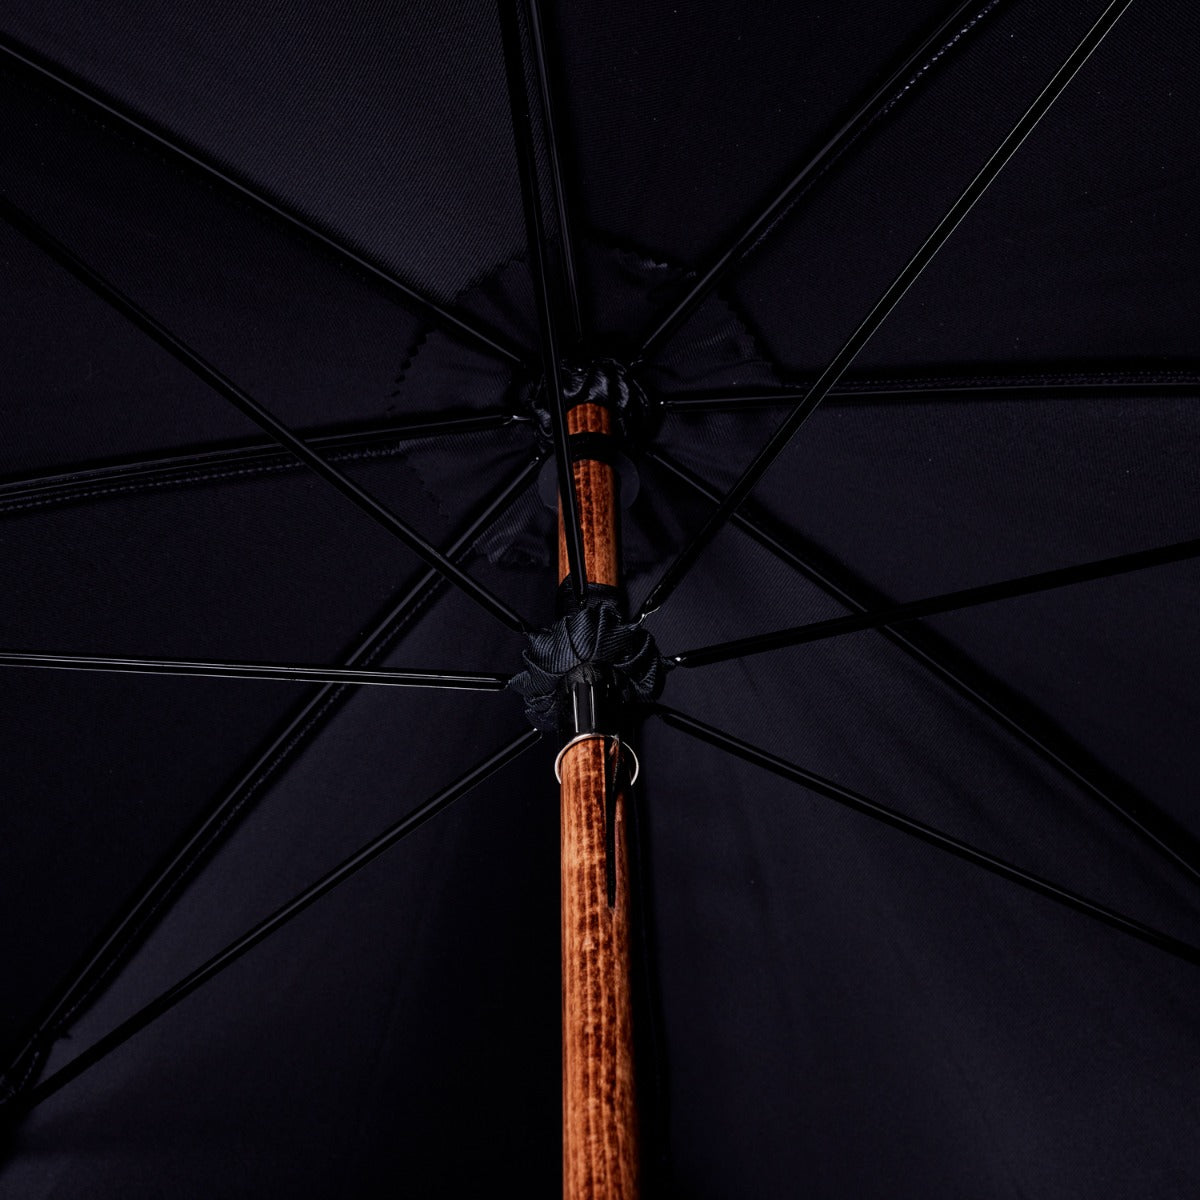 A Black Alligator Solid Stick with Black Canopy umbrella from KirbyAllison.com.